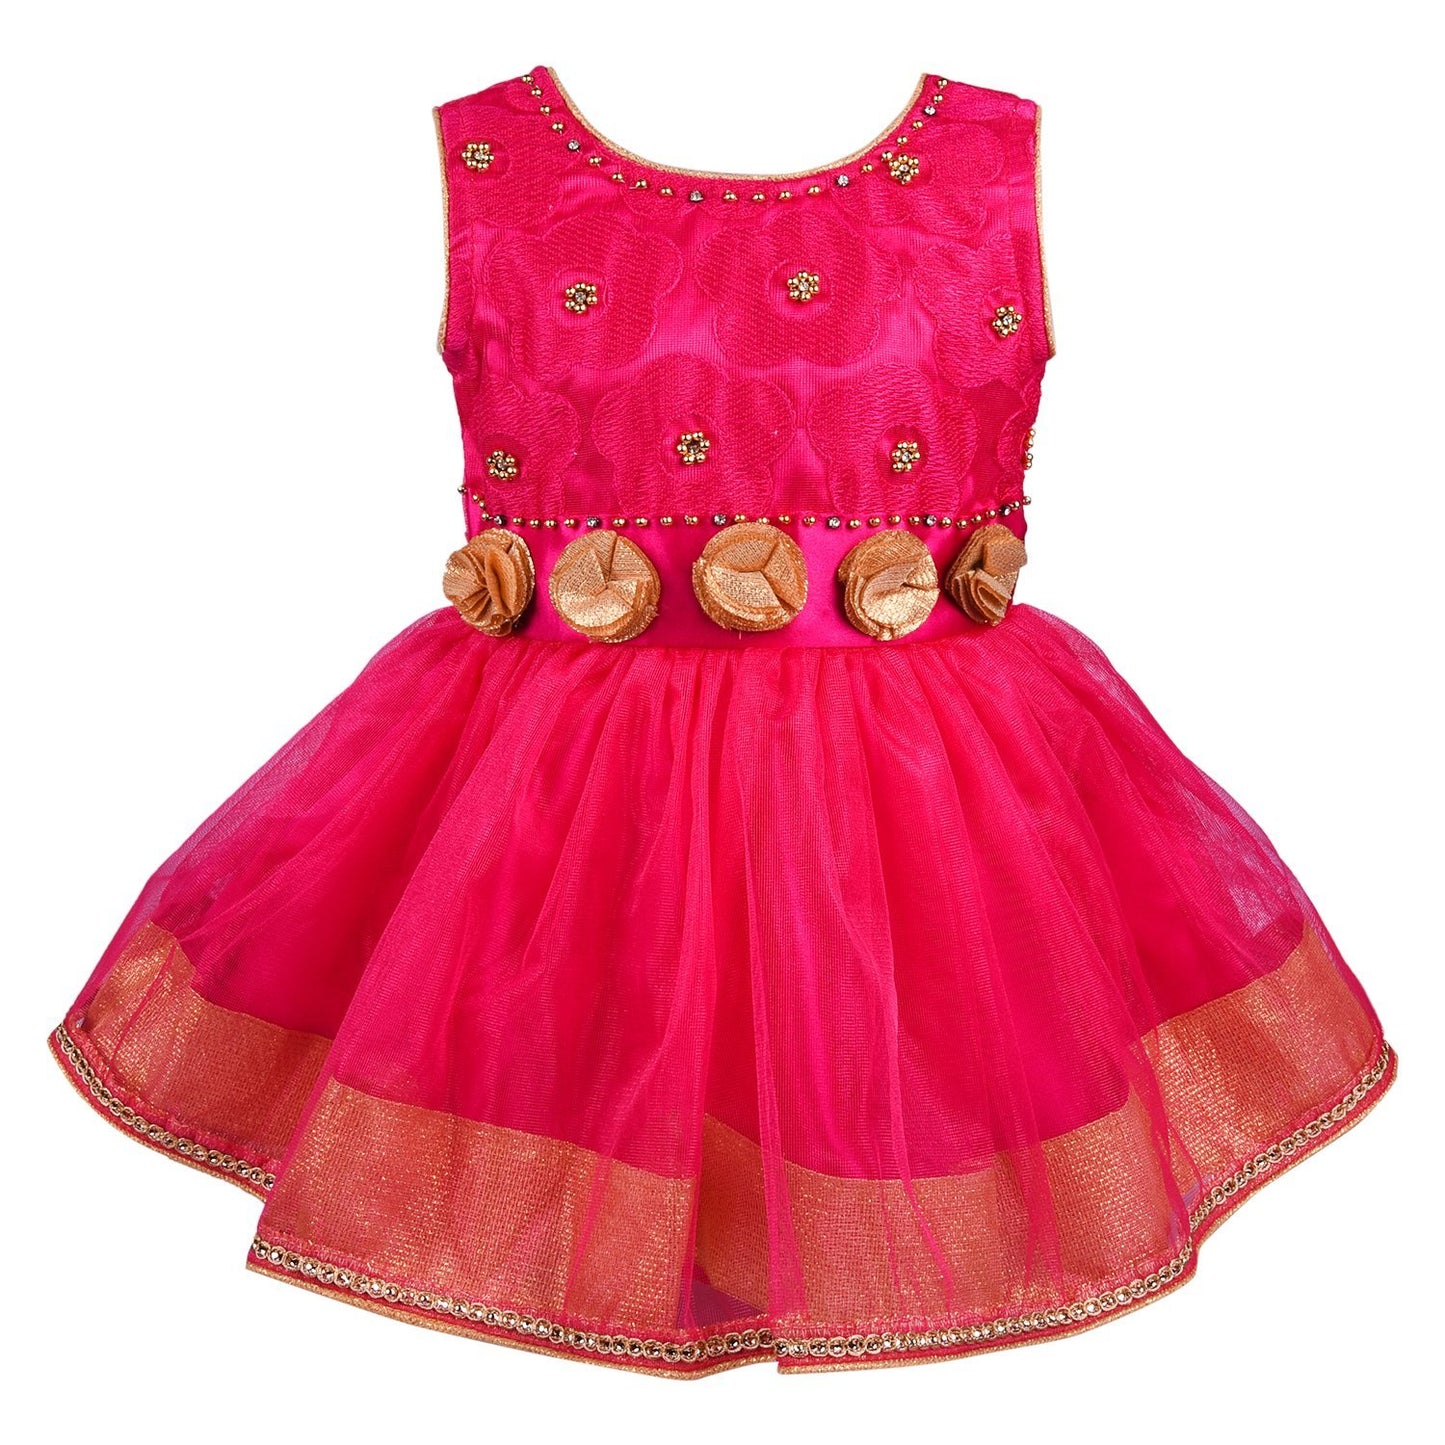 baby girls Party Wear Frock Dress Bx82pnk - Wish Karo Party Wear - frocks Party Wear - baby dress